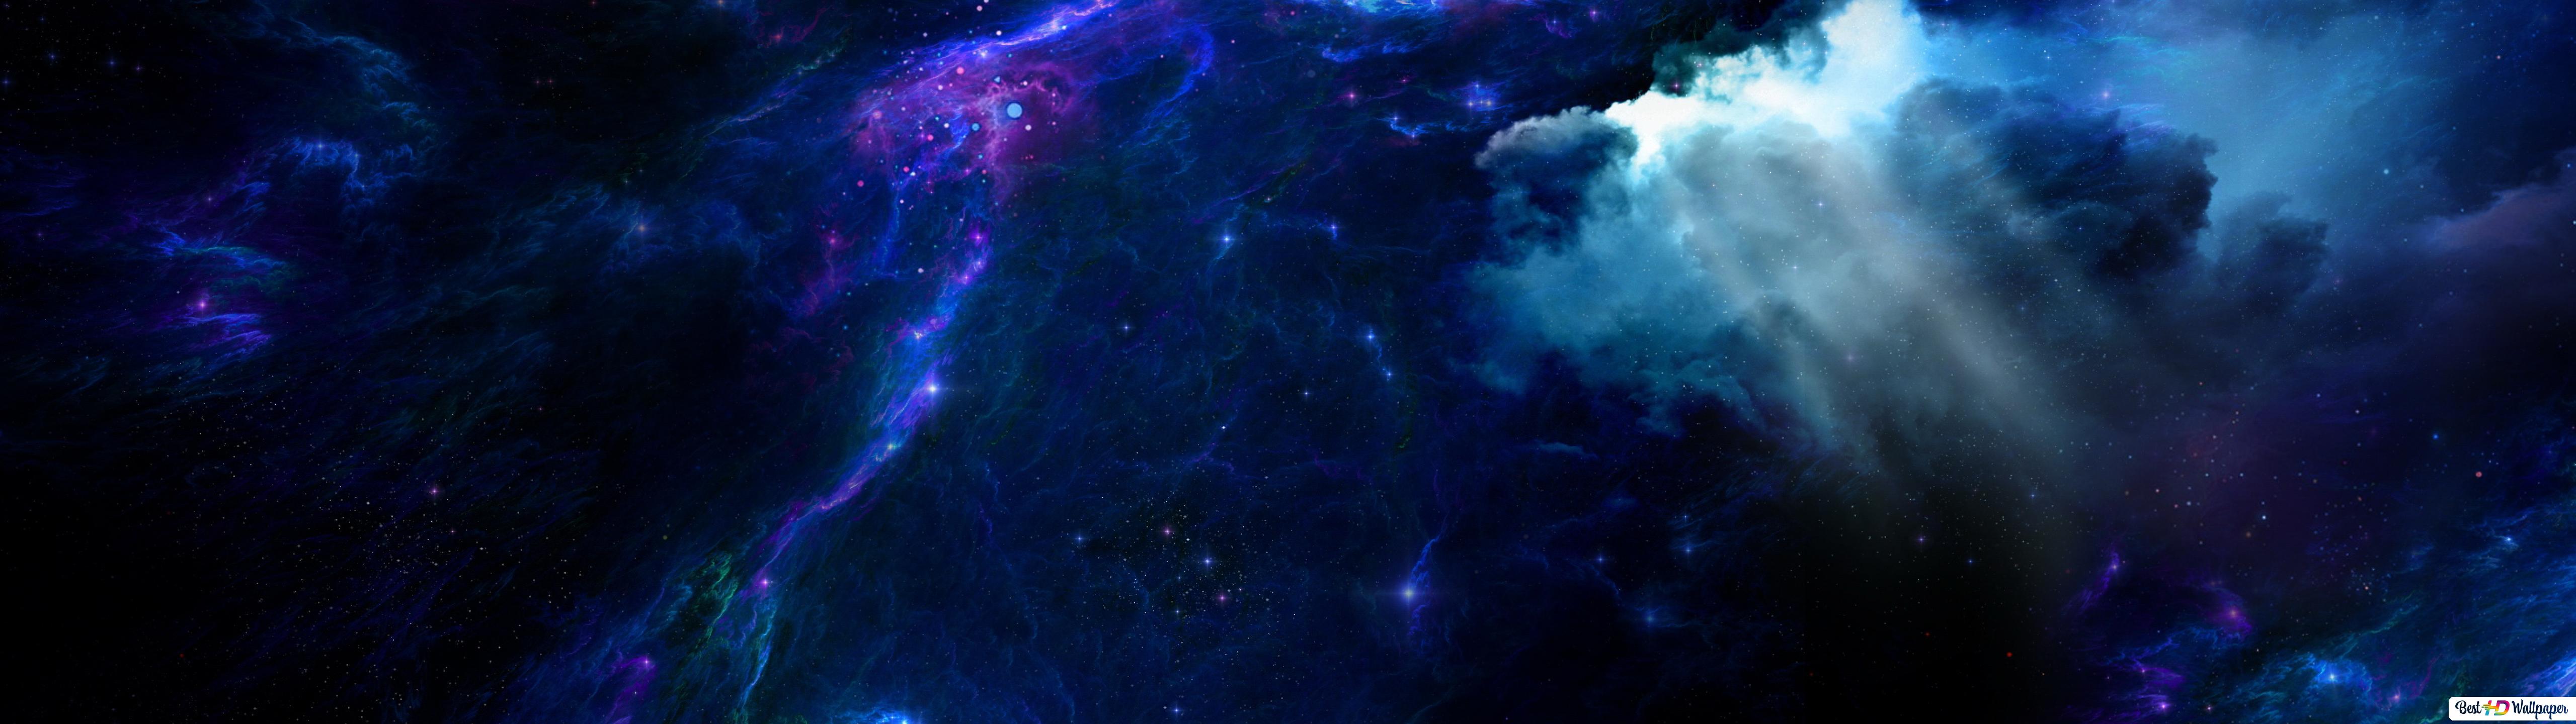 Rays Shining Through Blue Space Nebula HD wallpaper download